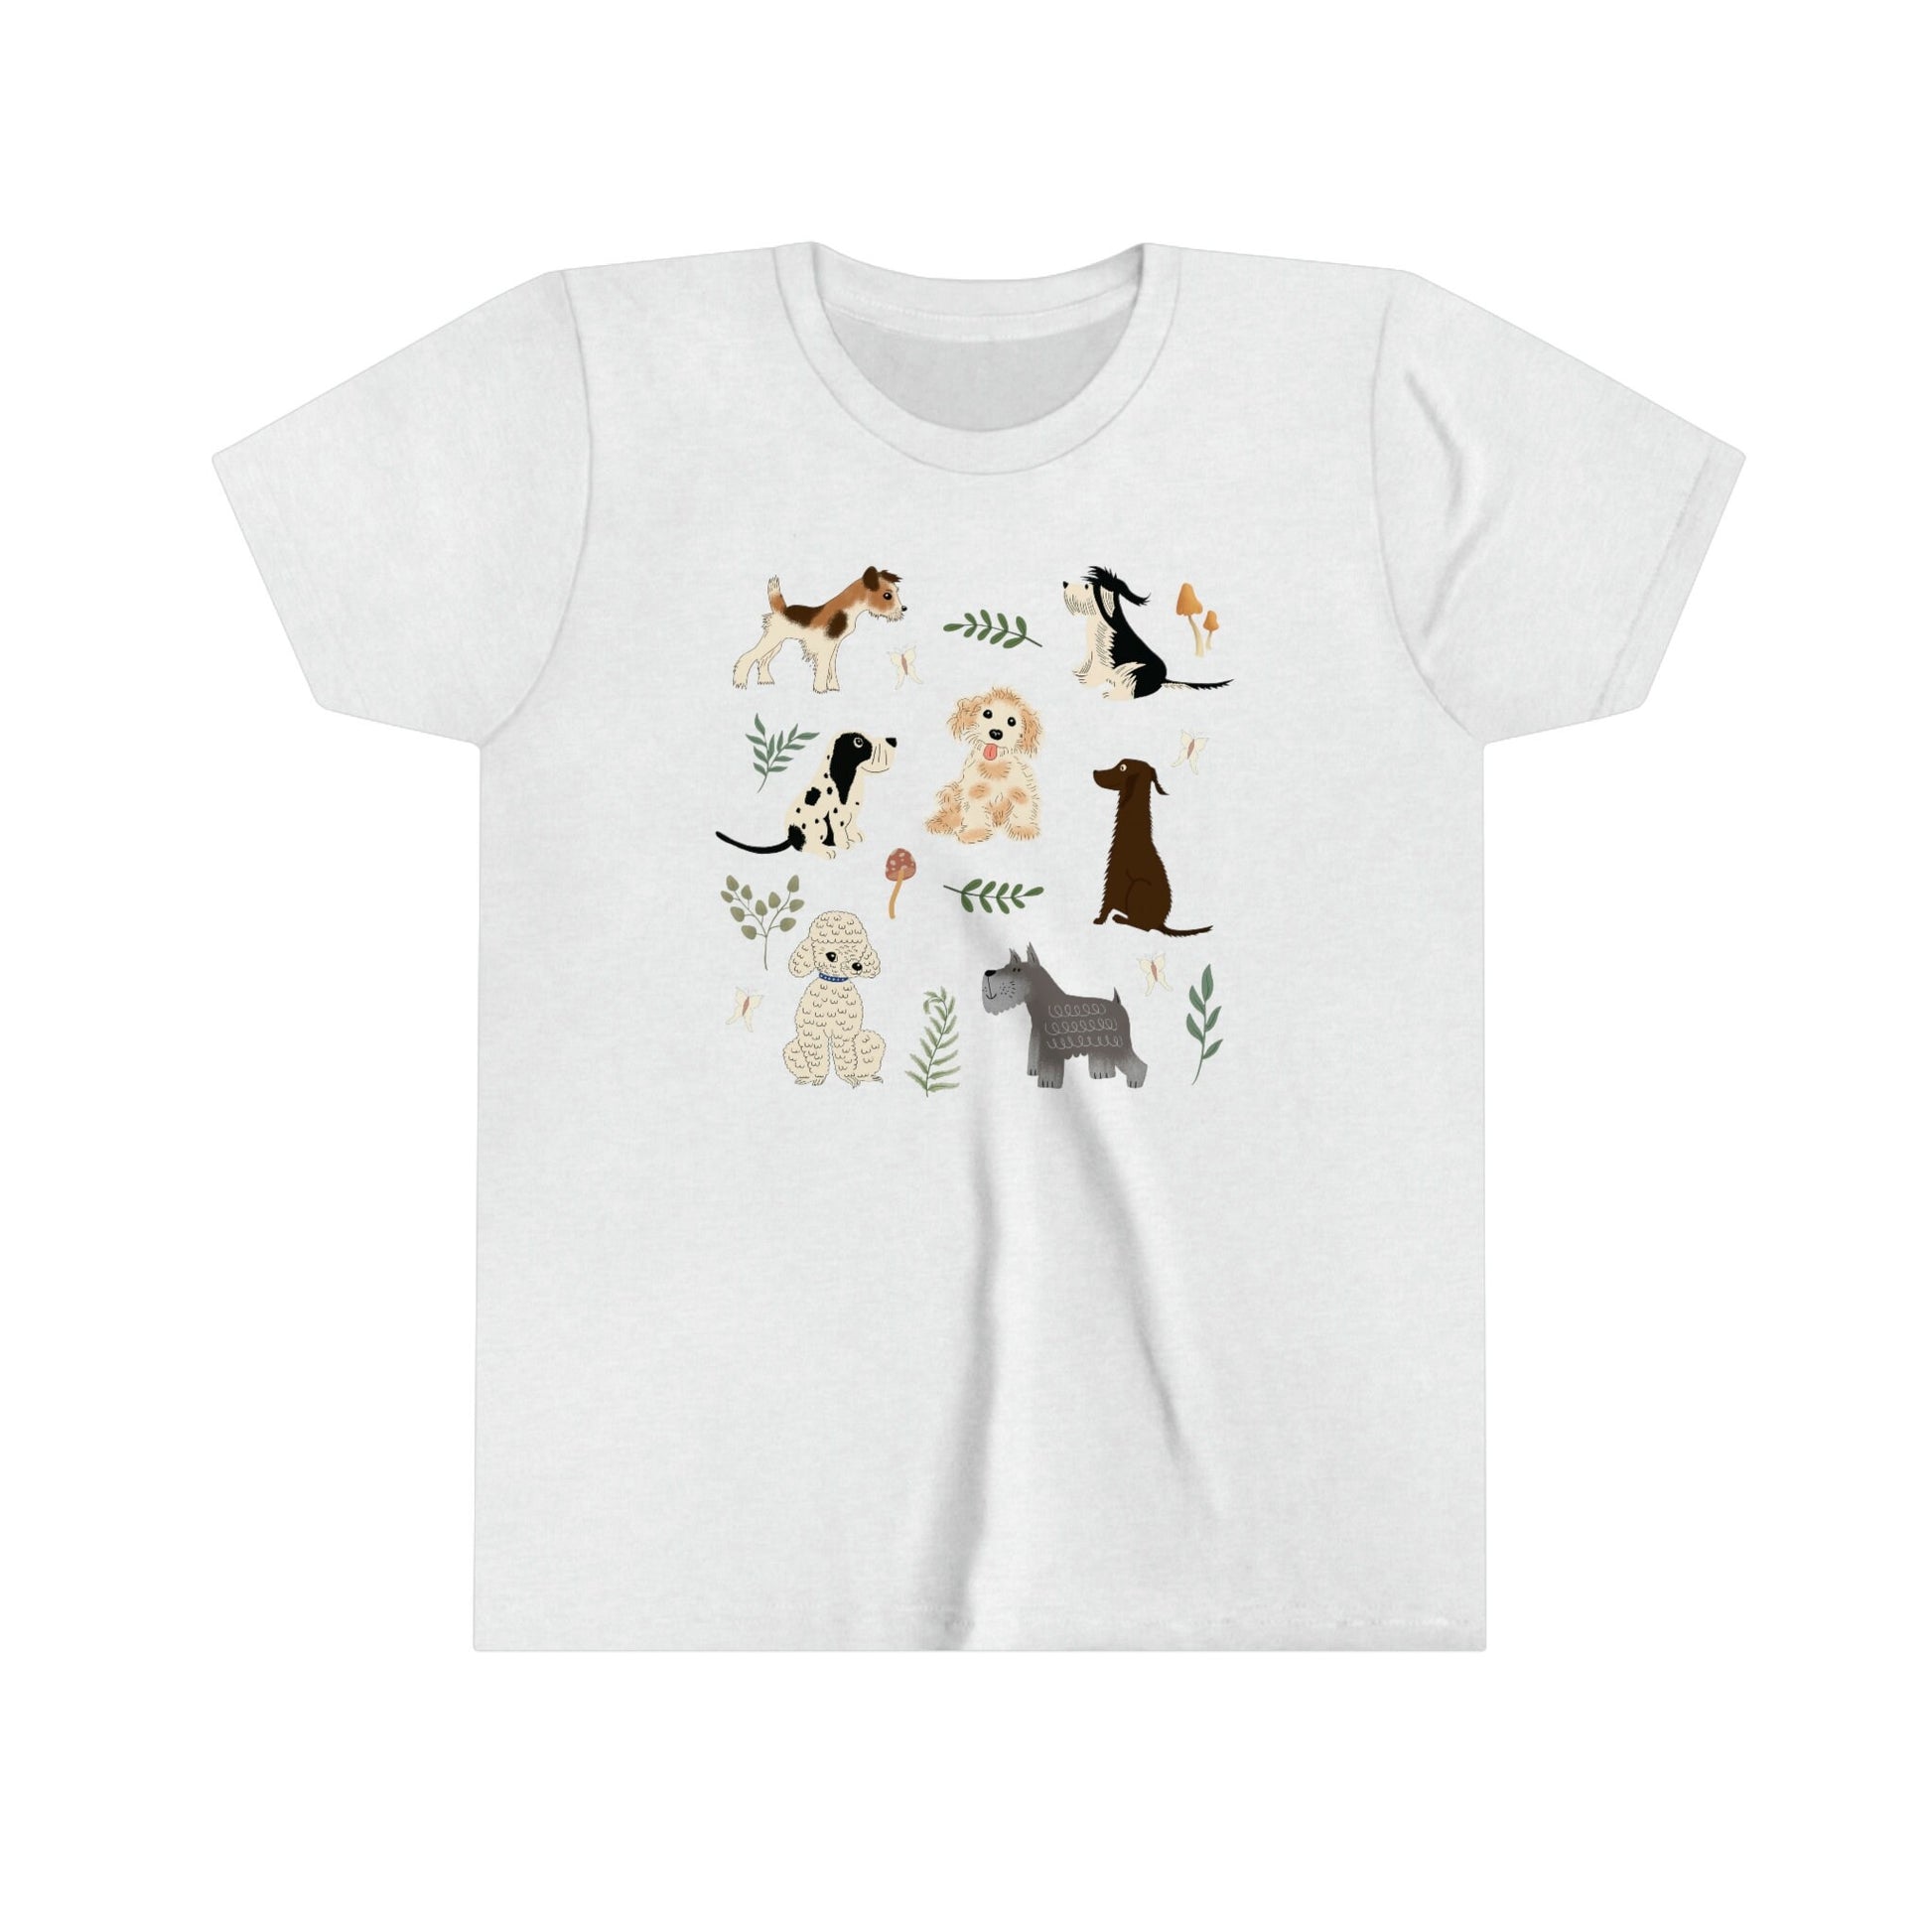 Kids Dog Shirt Toddler Dog Shirt Kids Cottage Core Clothes Dog Lover Gift Puppy Shirt for Girls Youth Shirt Dog Lover Animal Lover Gift Girl